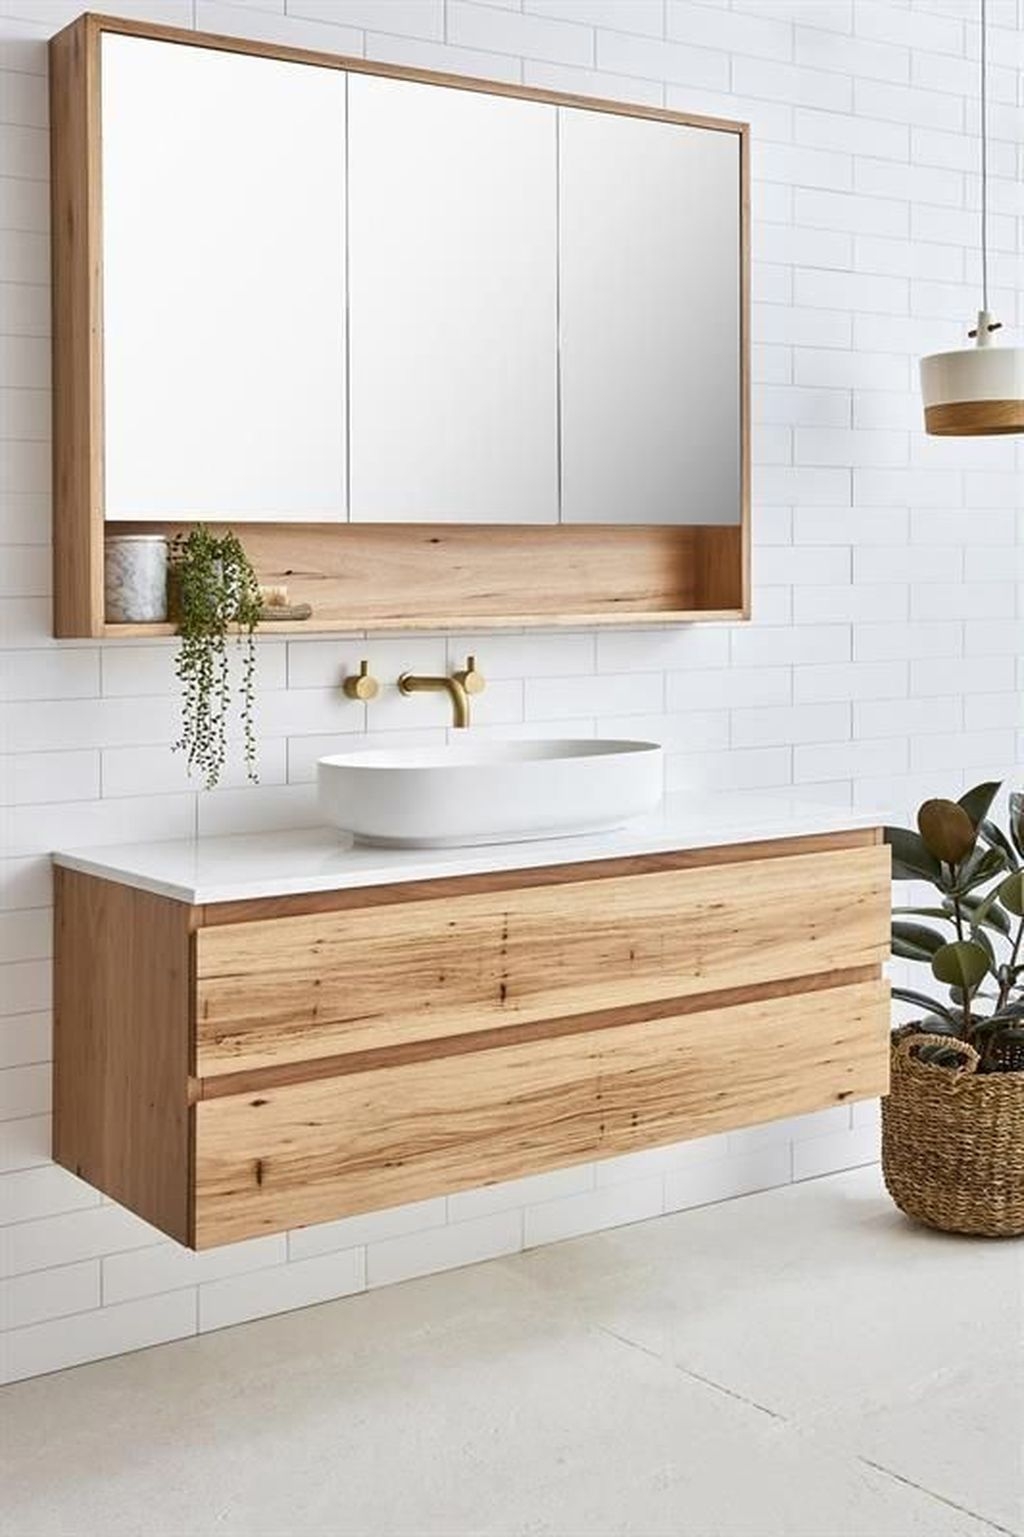 Inspiring Bathroom Decoration Ideas With Wooden Storage 25